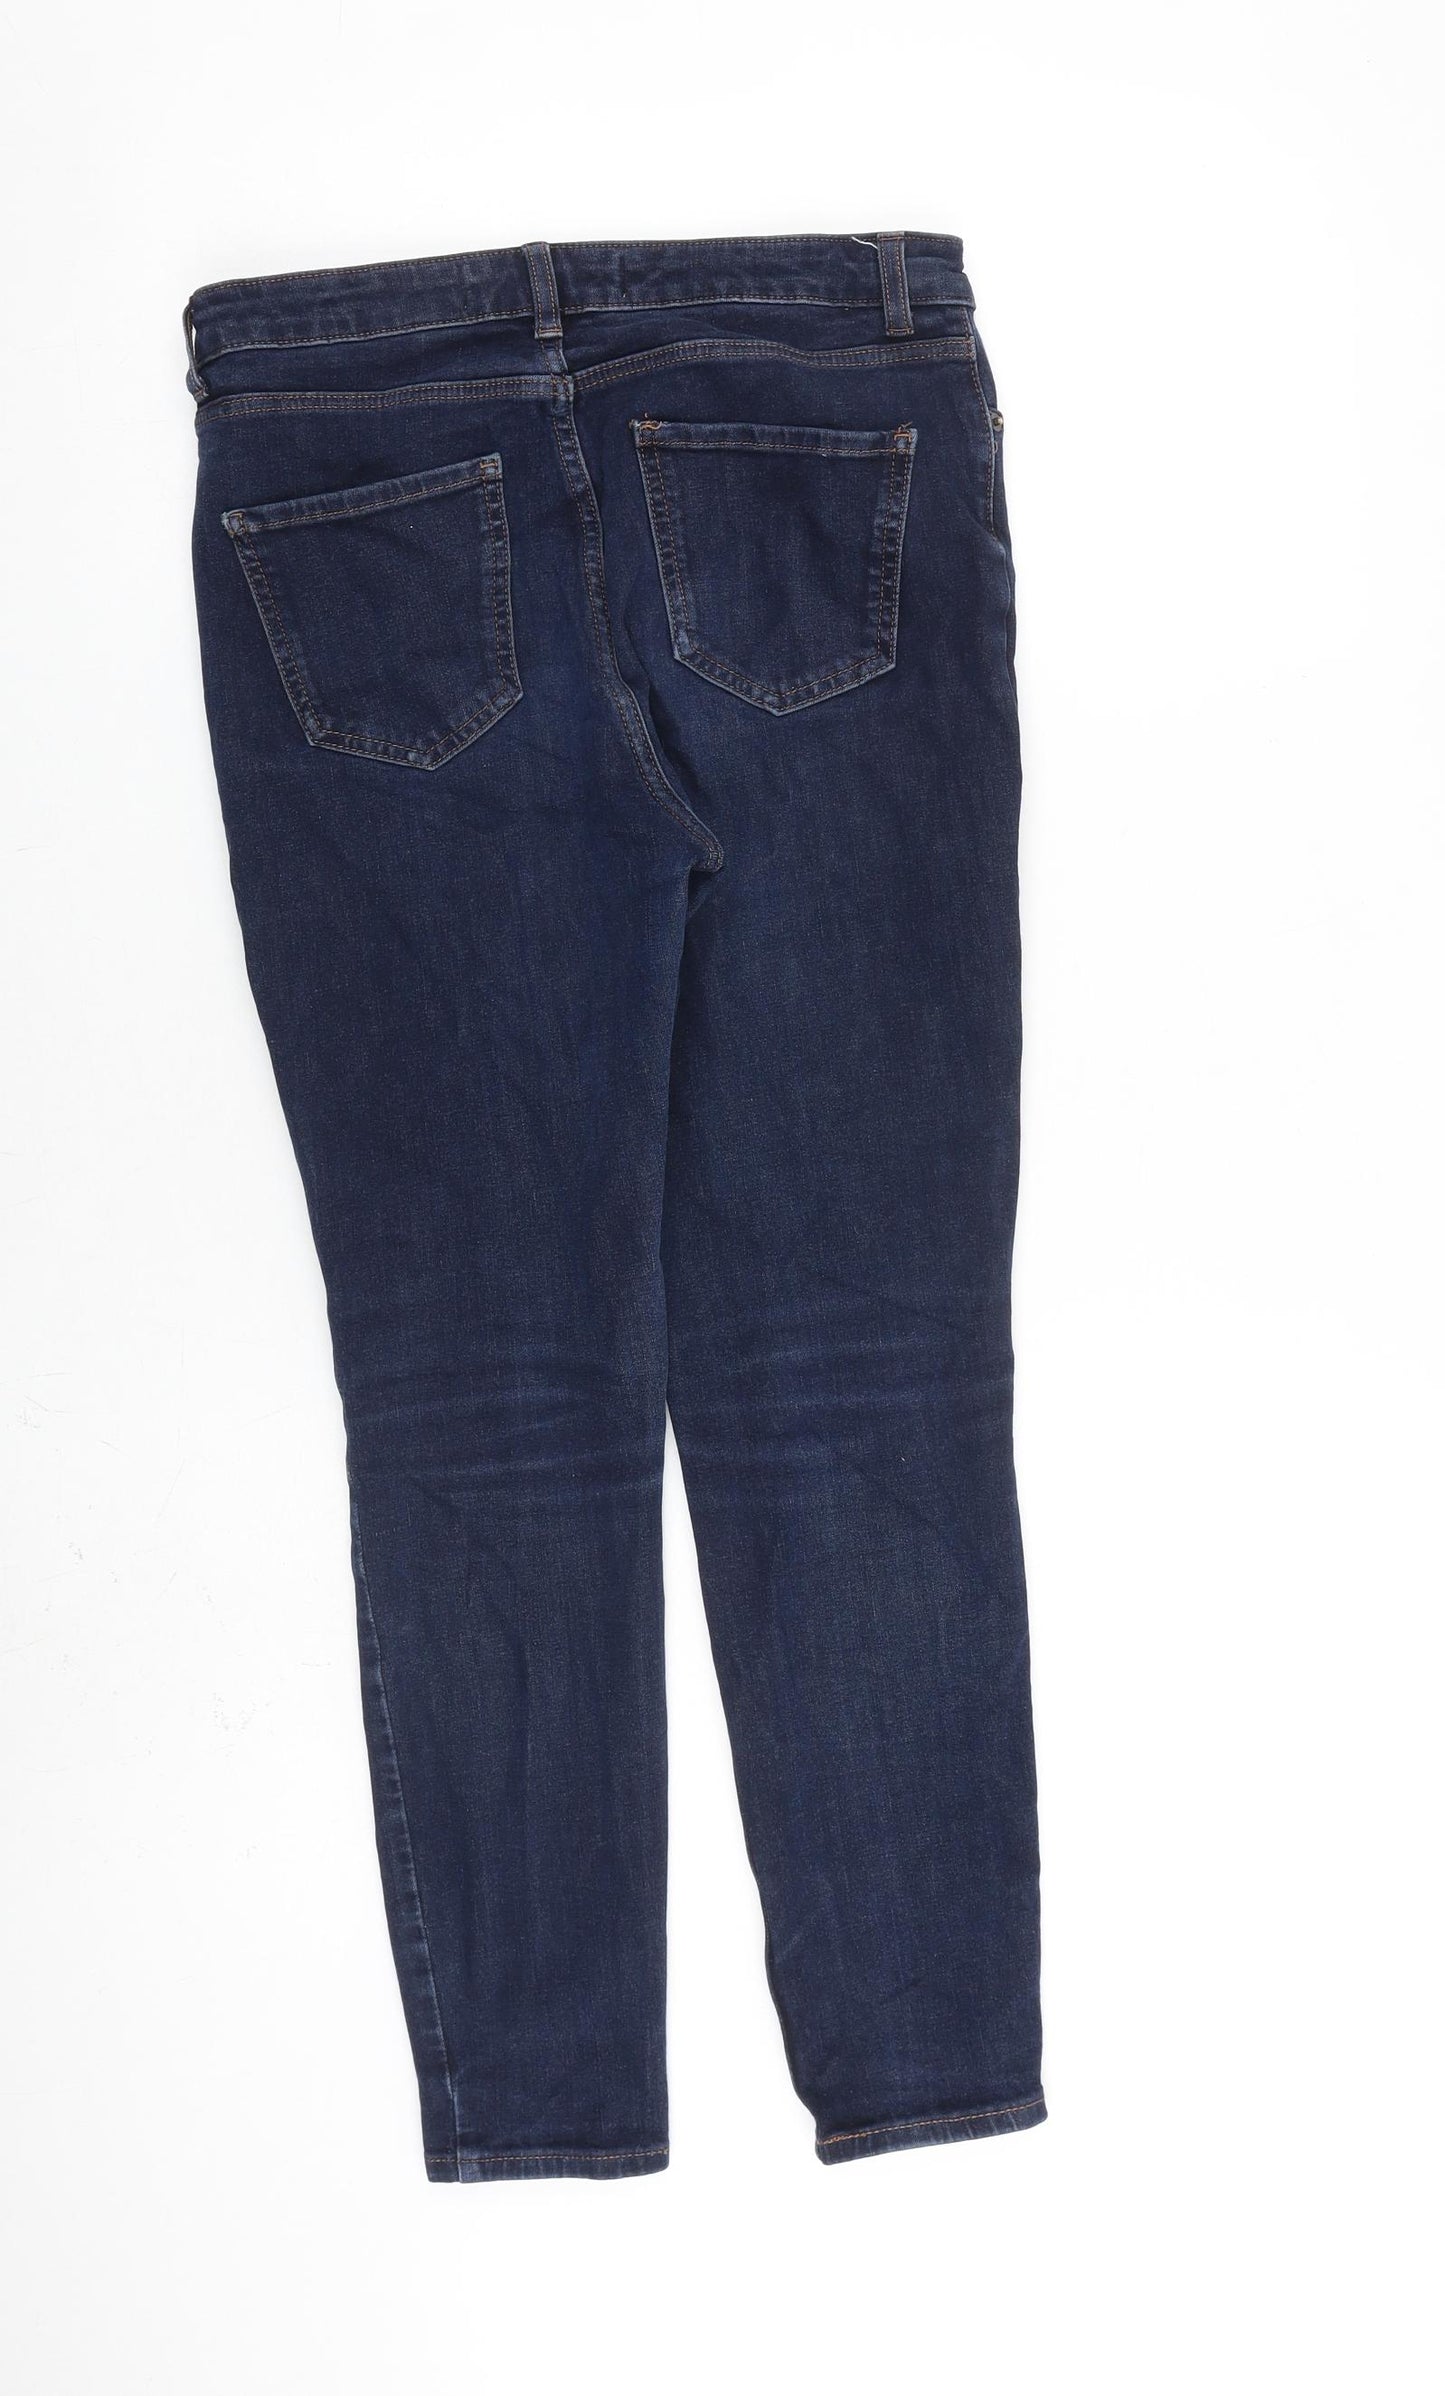 NEXT Womens Blue Cotton Skinny Jeans Size 12 L25 in Slim Zip